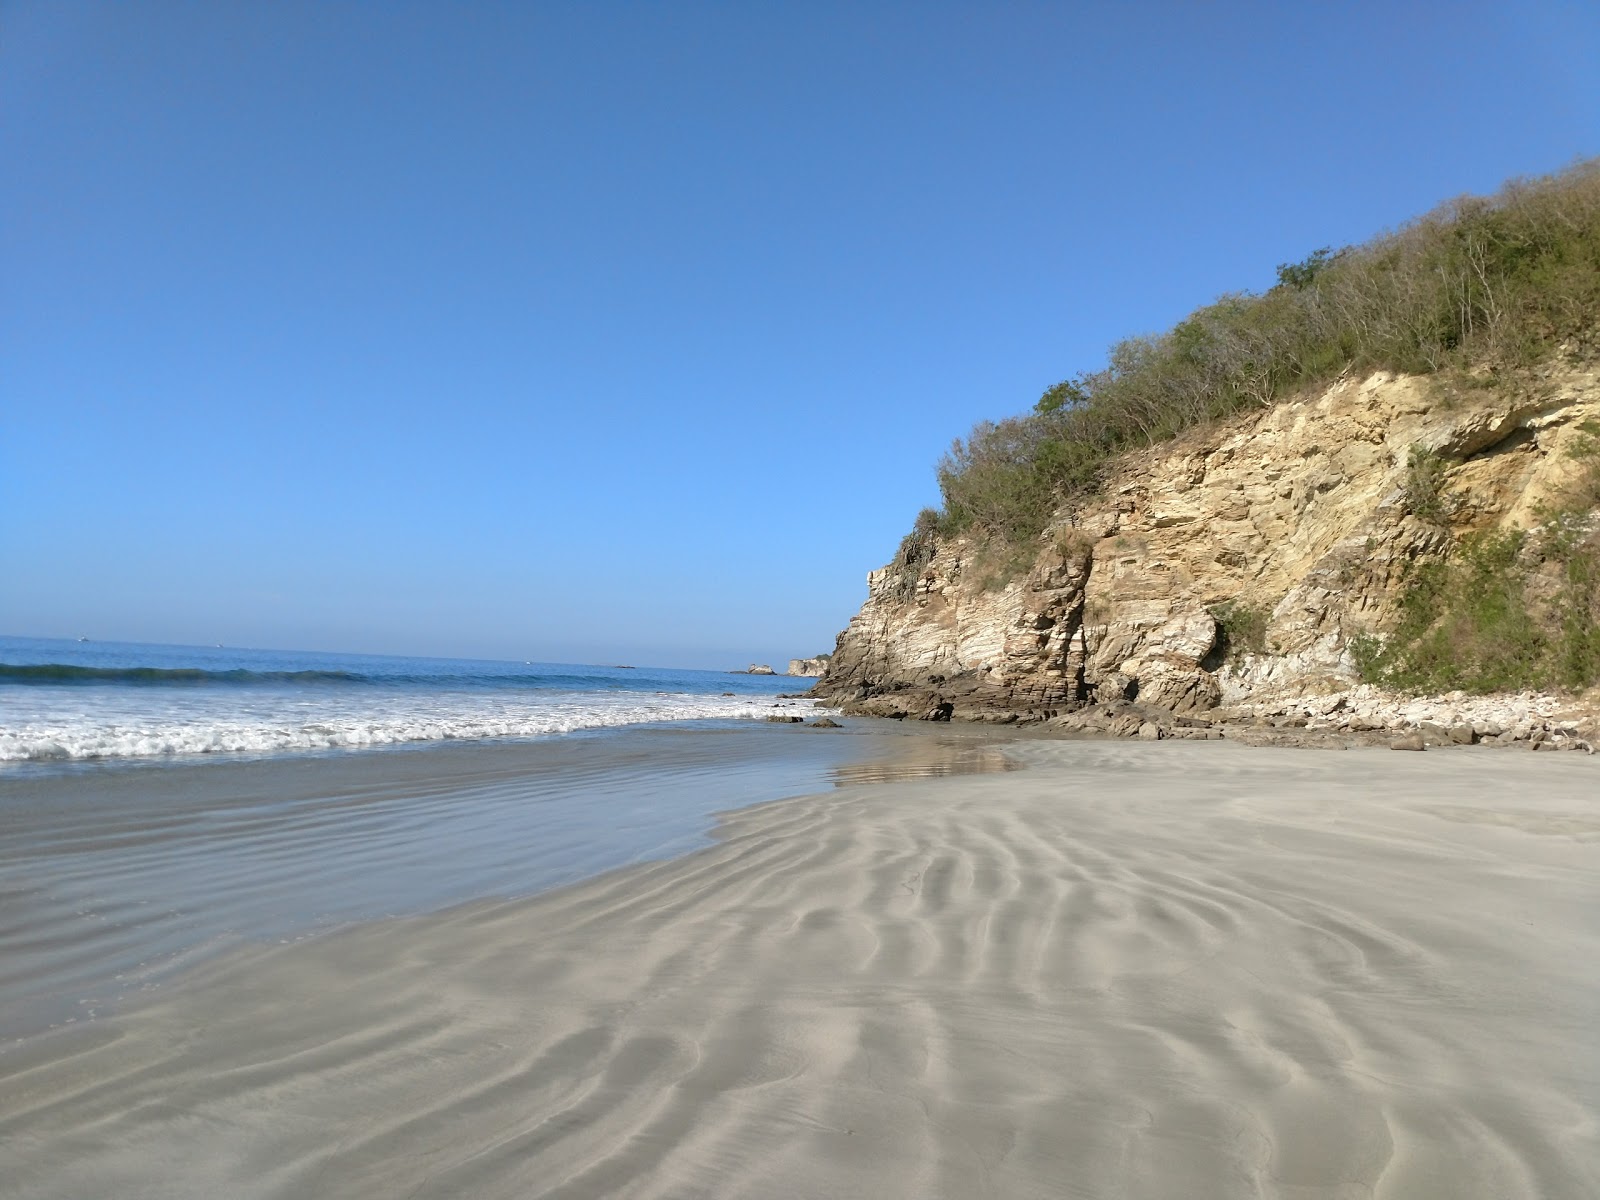 Fotografija Palito Verde beach z turkizna čista voda površino